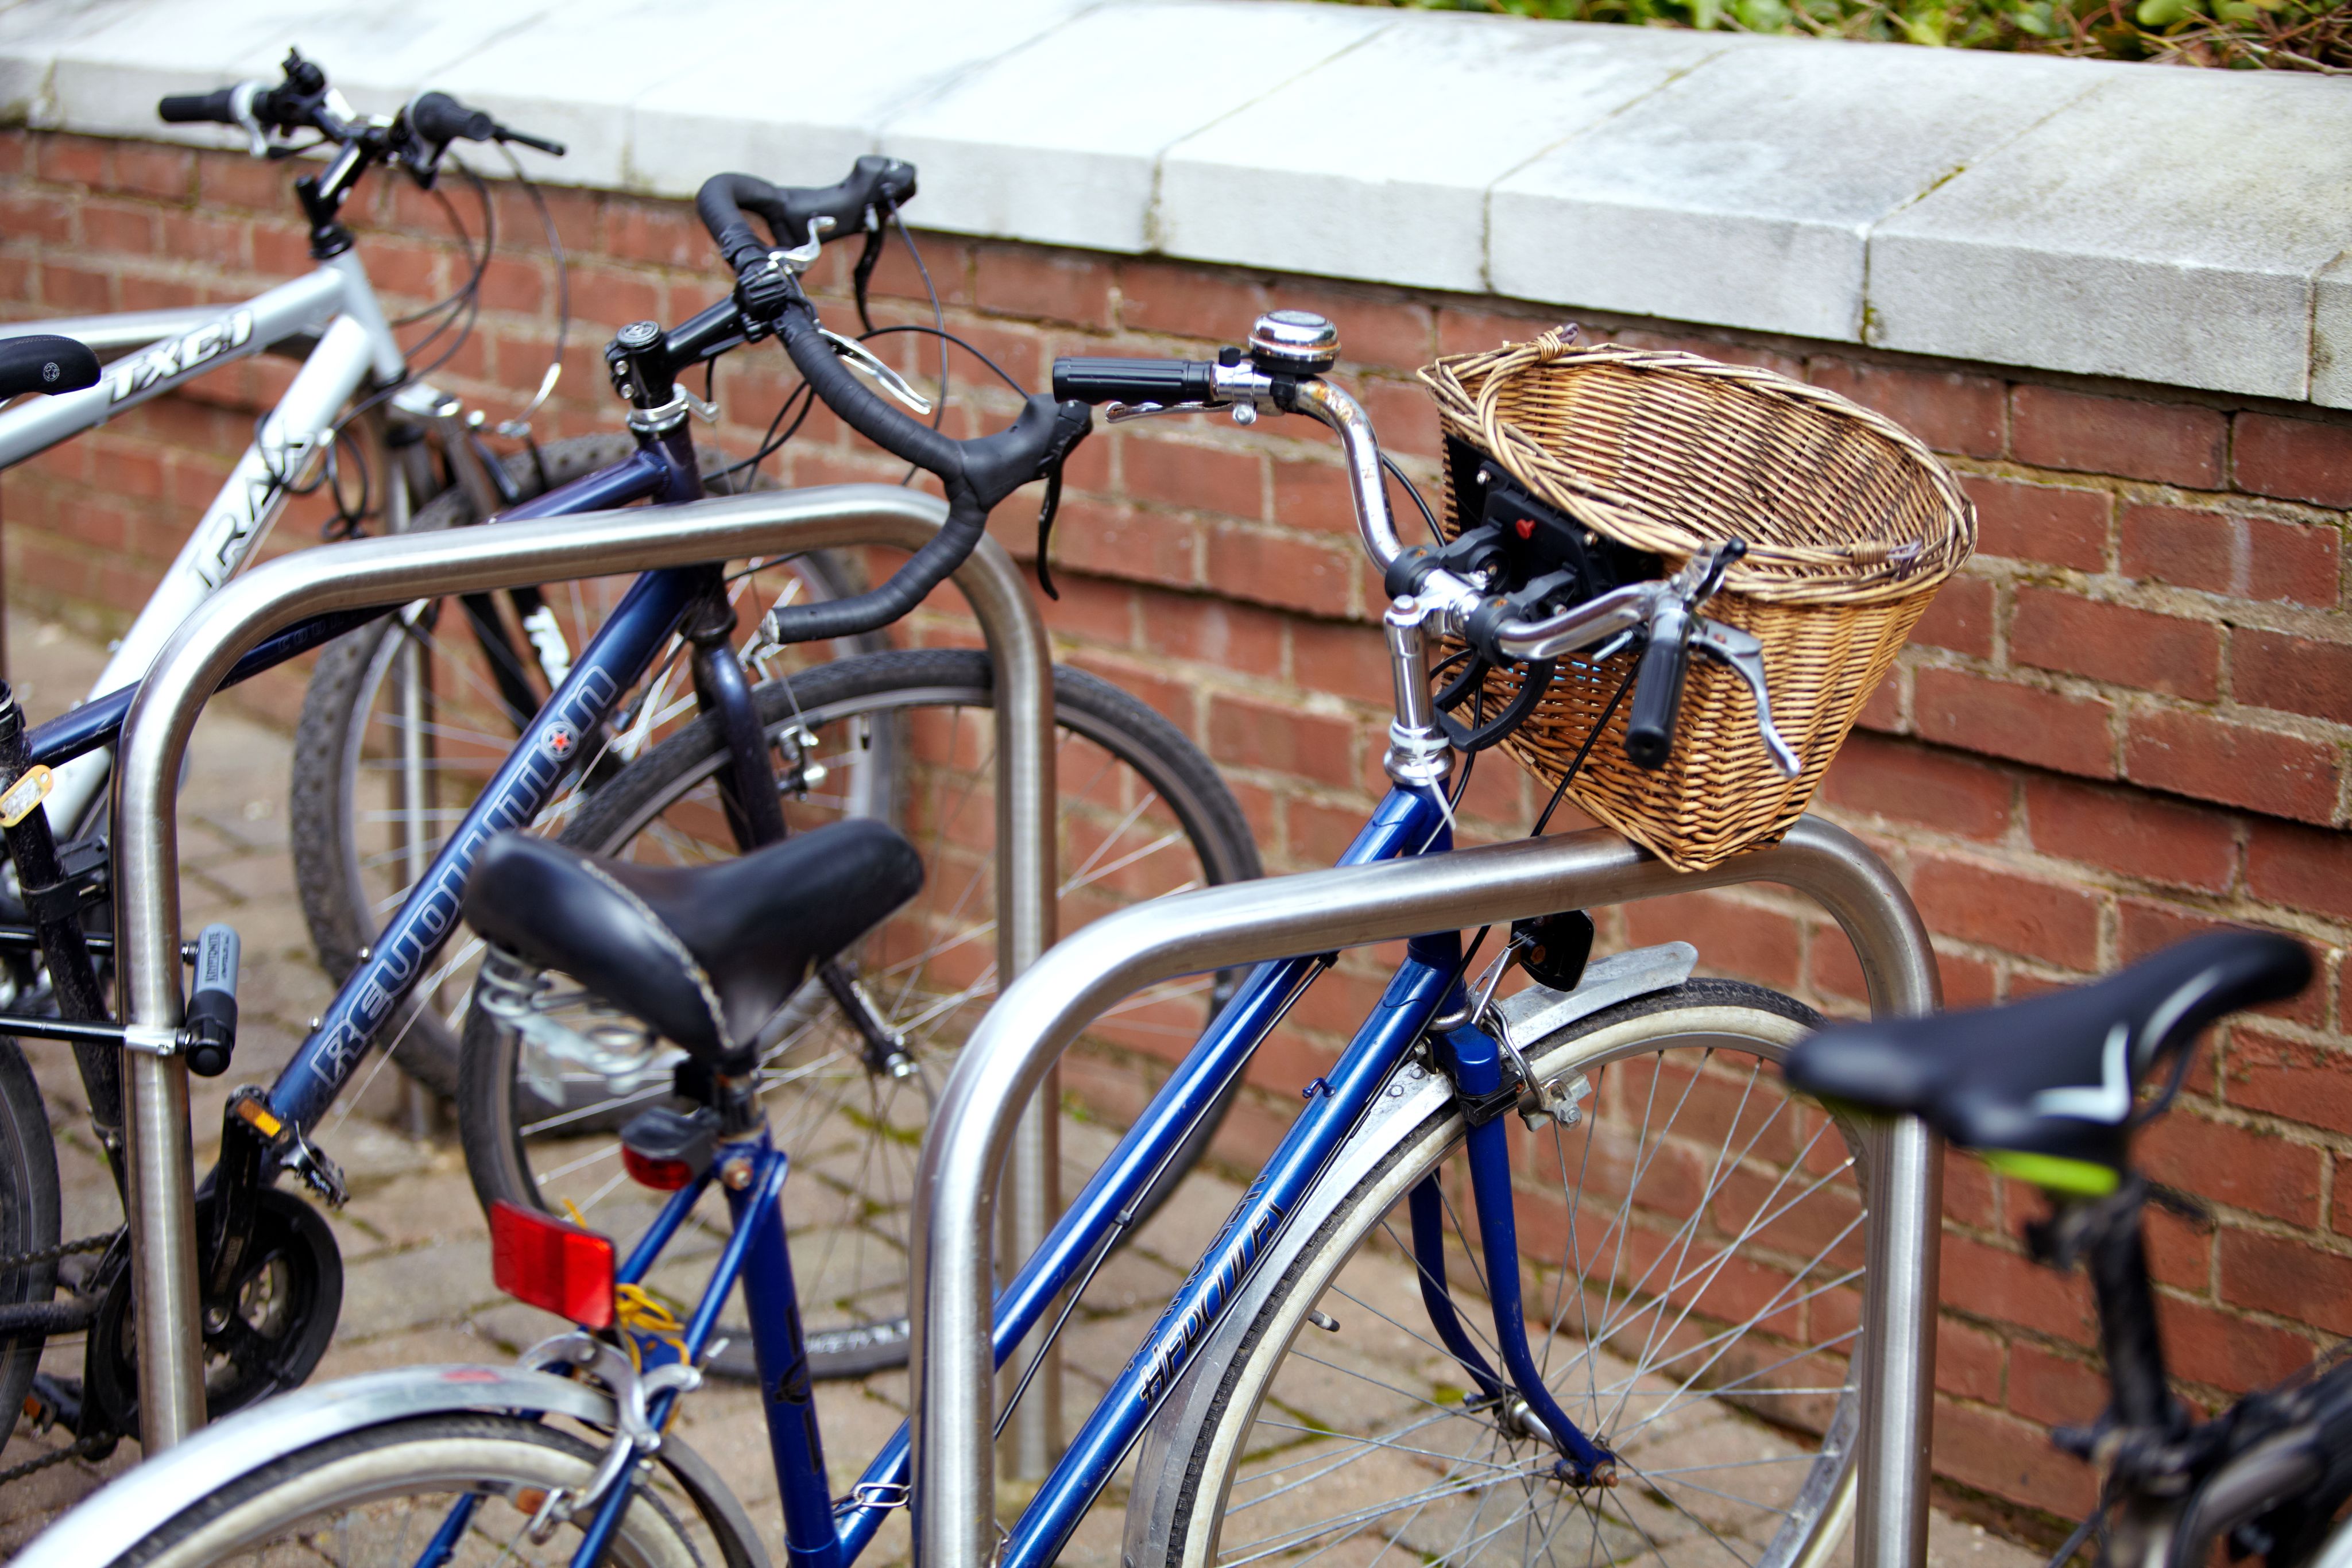 Bicycles parked at bike racks.